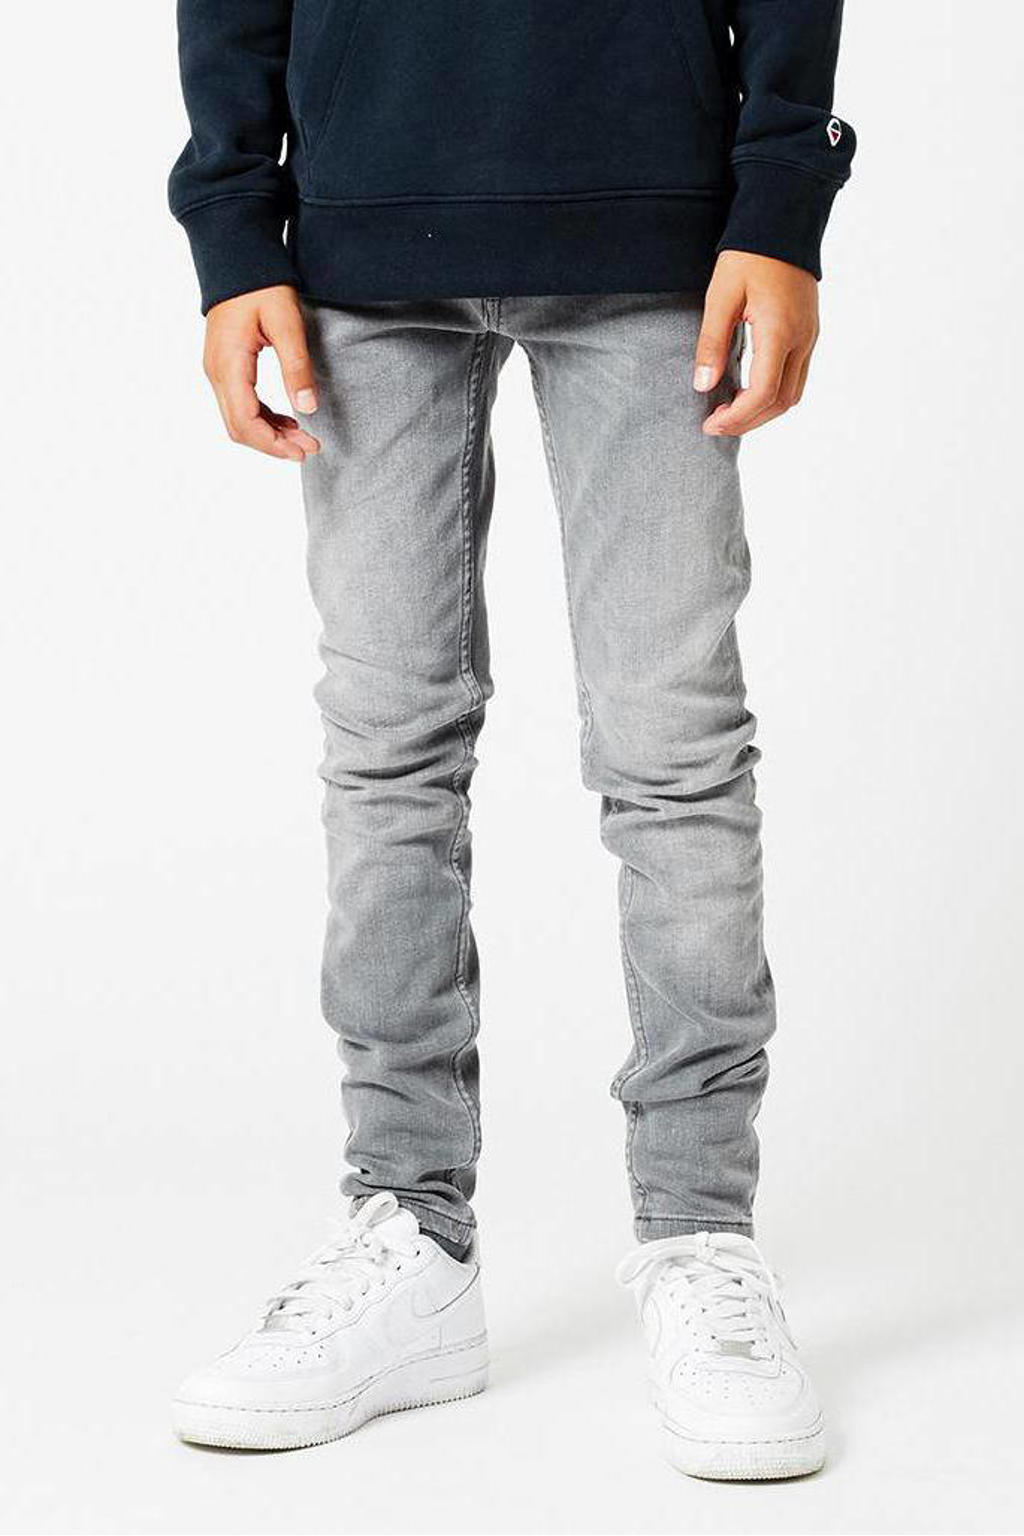 America Today Junior skinny jeans Keanu  grijs stonewashed